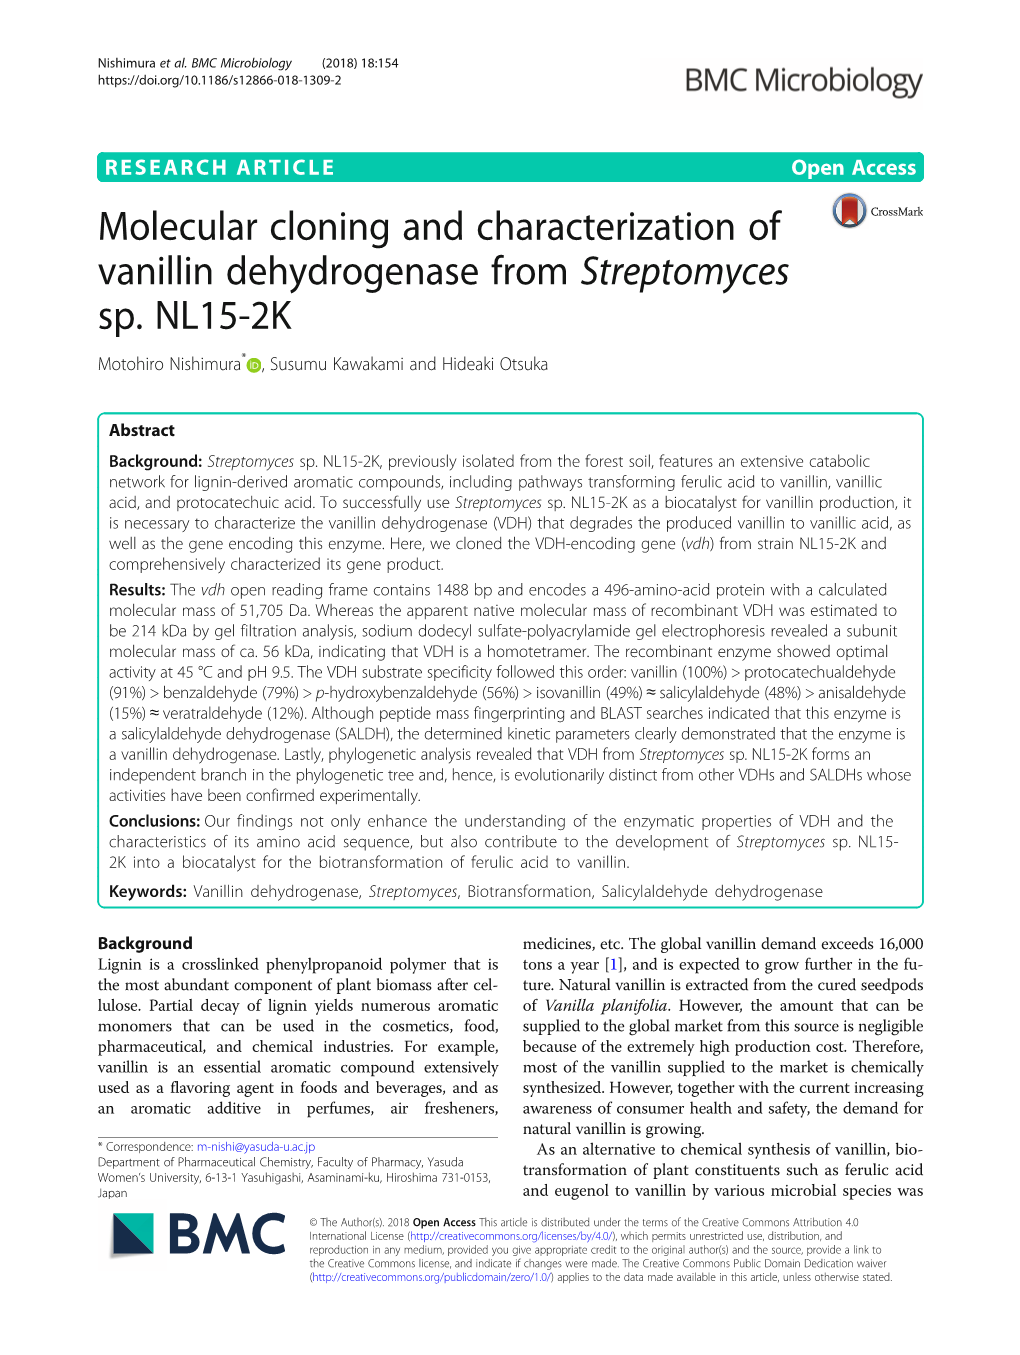 Molecular Cloning and Characterization of Vanillin Dehydrogenase from Streptomyces Sp